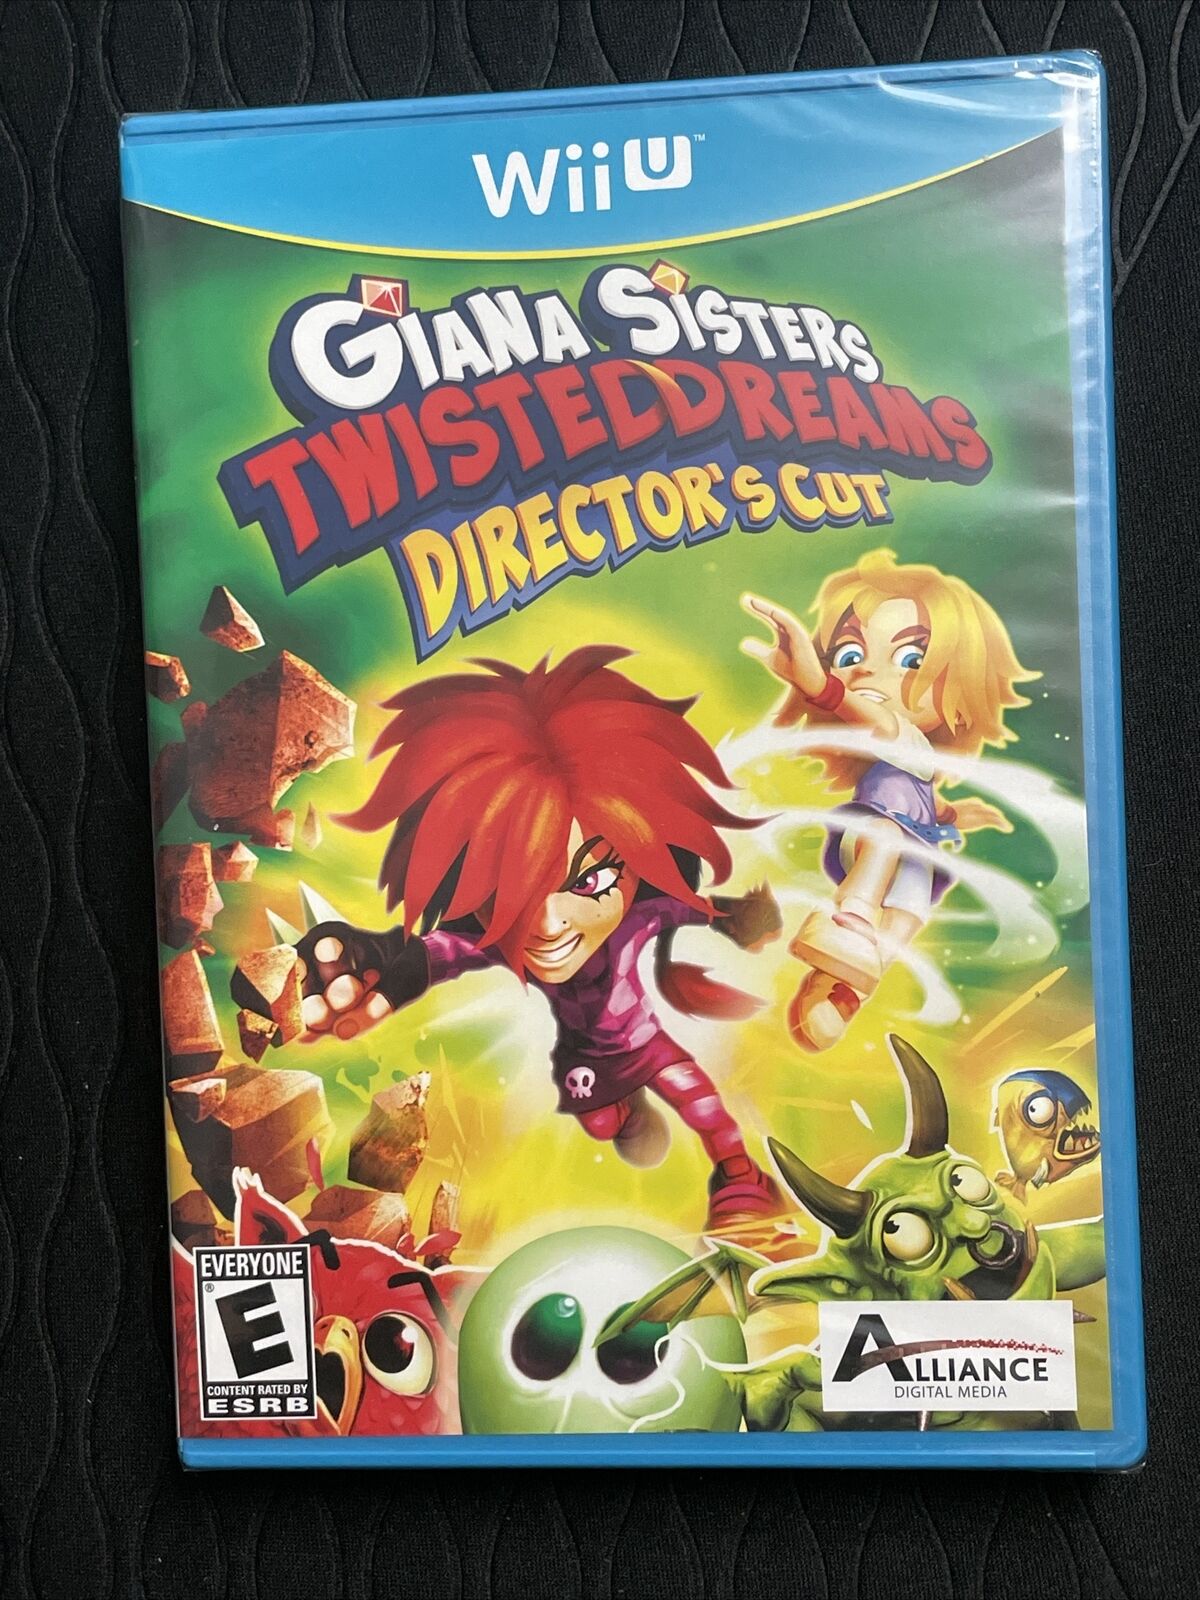 Giana Sisters: Twisted Dreams Director's Cut - Nintendo Wii U - Brand New